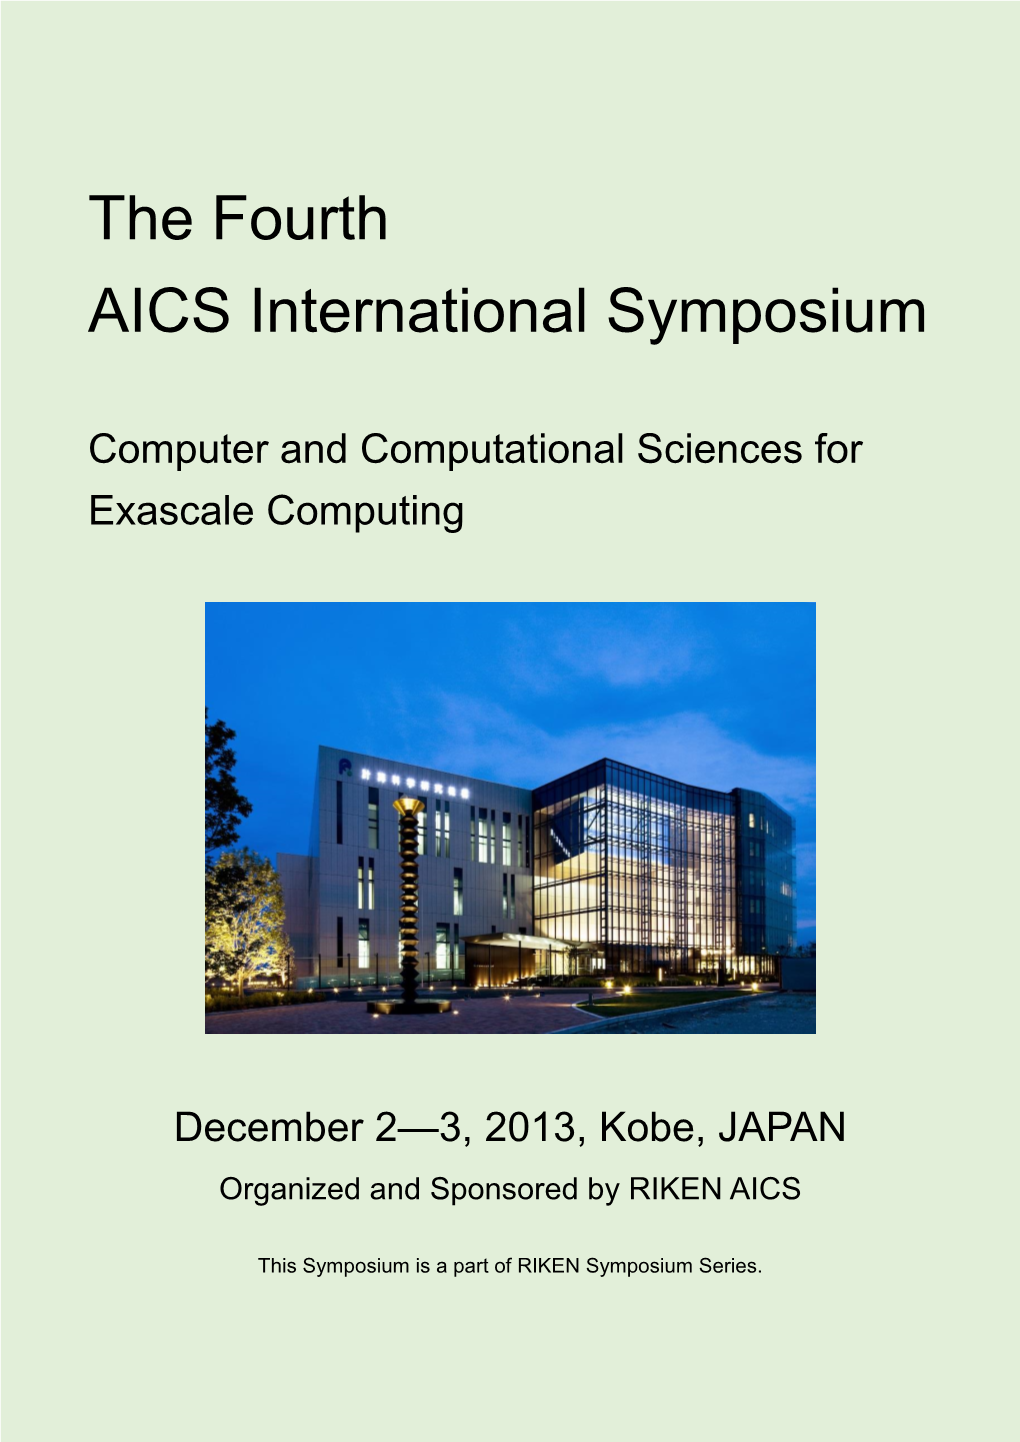 The Fourth AICS International Symposium